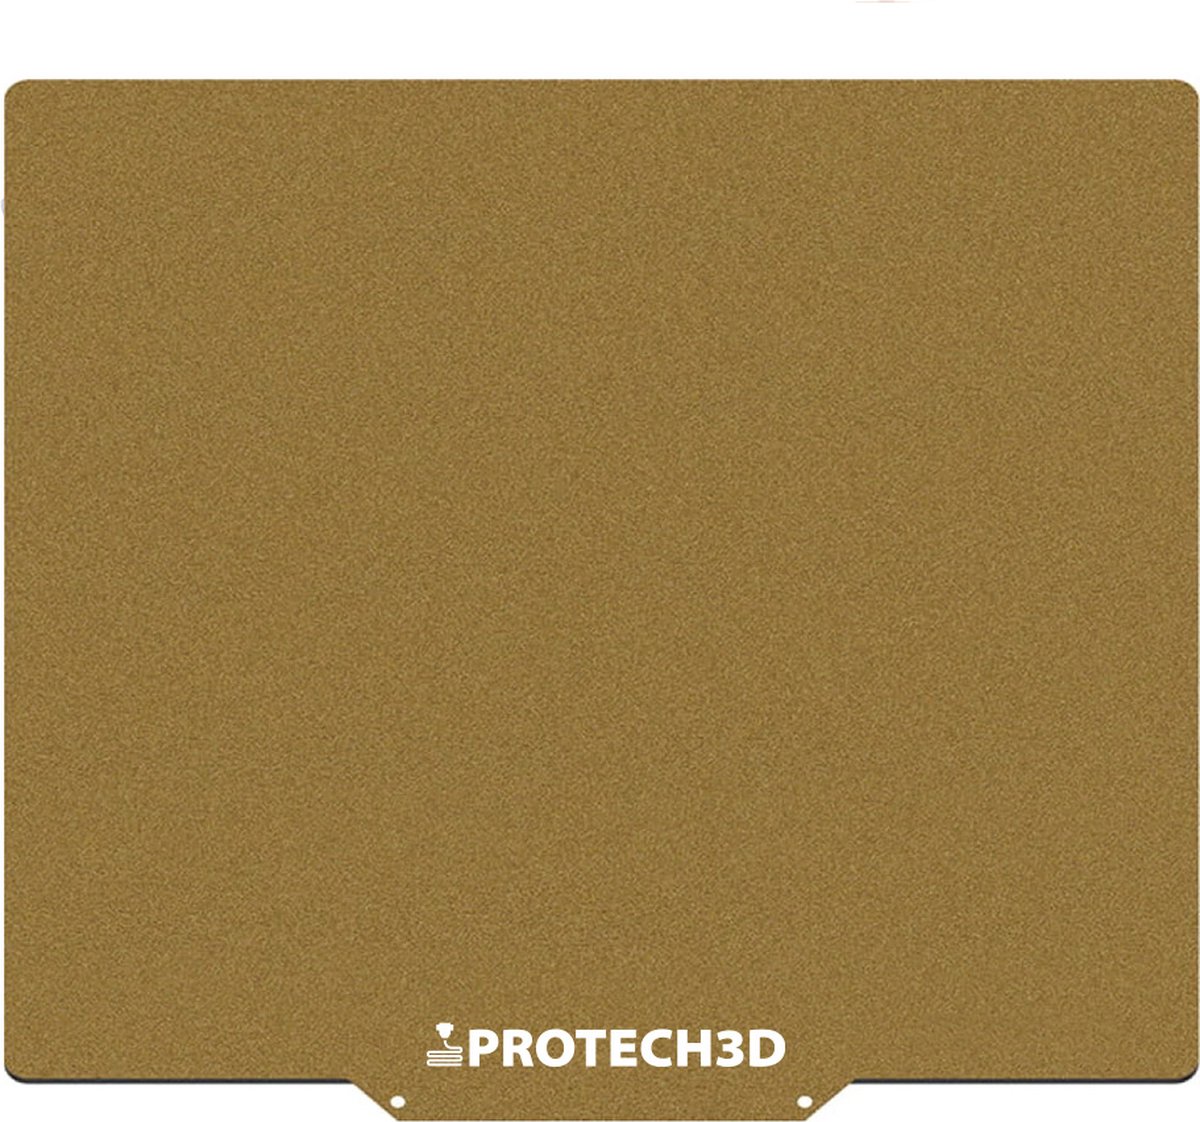 ProTech3D – Magnetic PEI powdercoated steel sheet 235x235mm